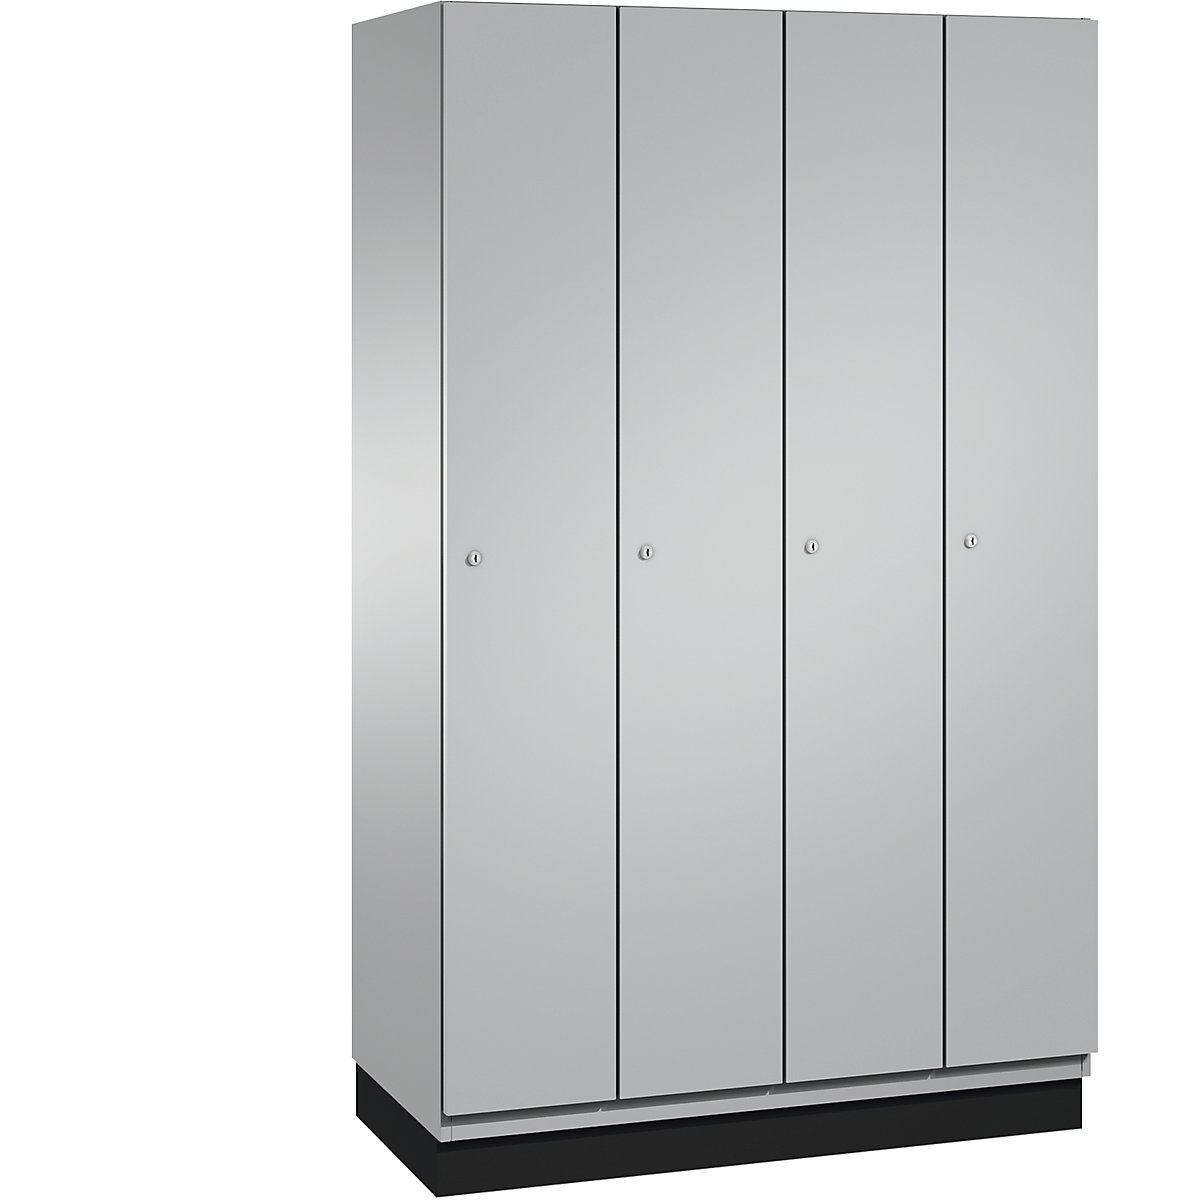 CAMBIO cloakroom locker with sheet steel doors – C+P, 4 compartments, 1200 mm wide, body white aluminium / door white aluminium-2